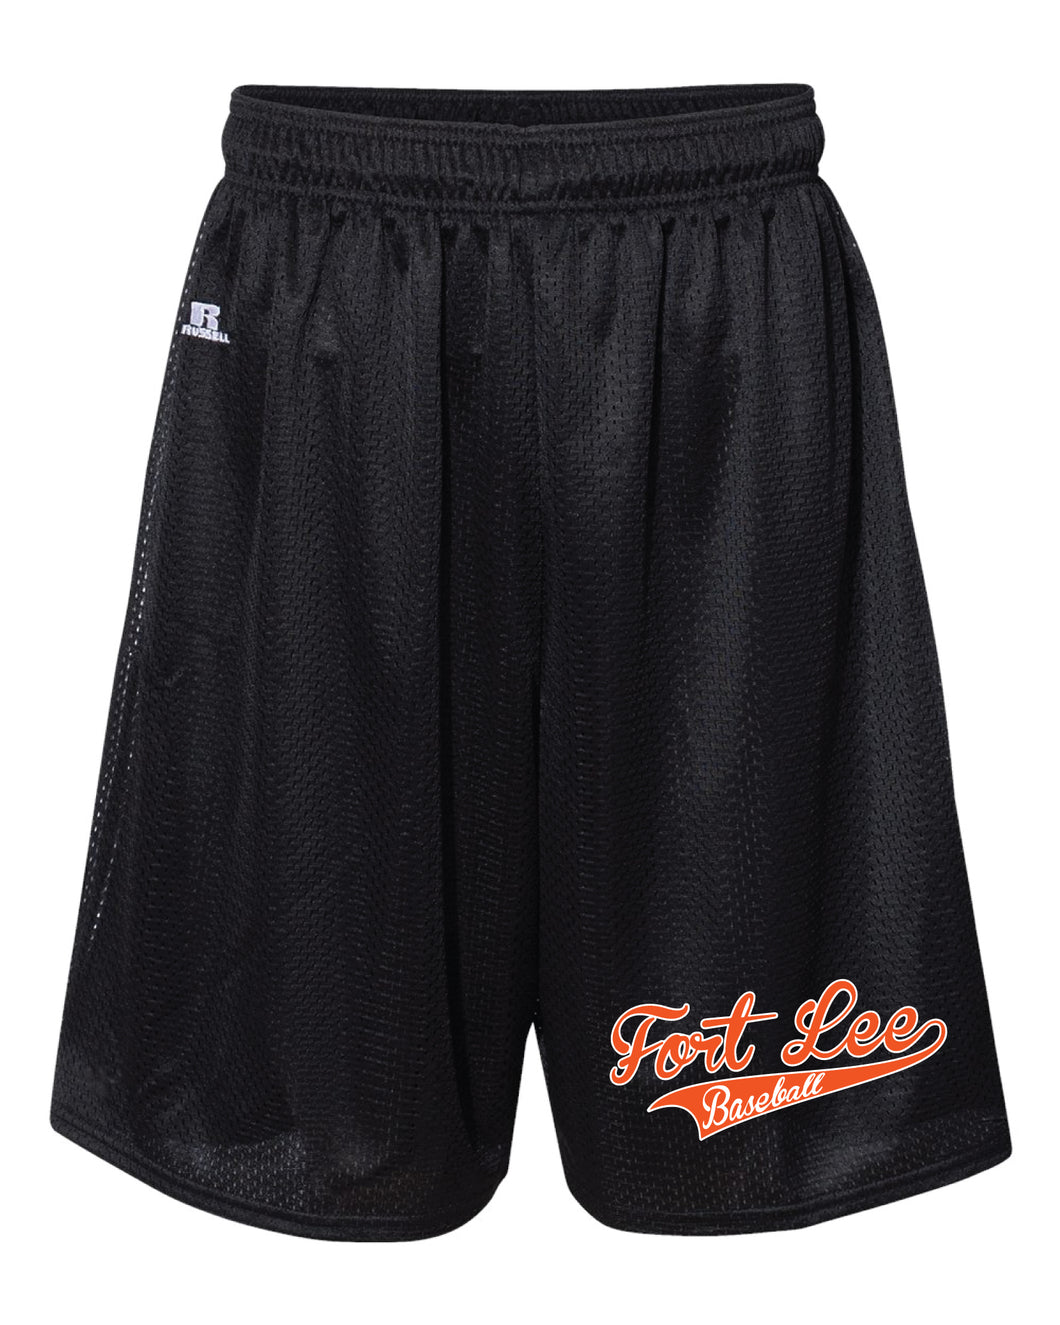 Fort Lee Baseball Tech Shorts - Black - 5KounT